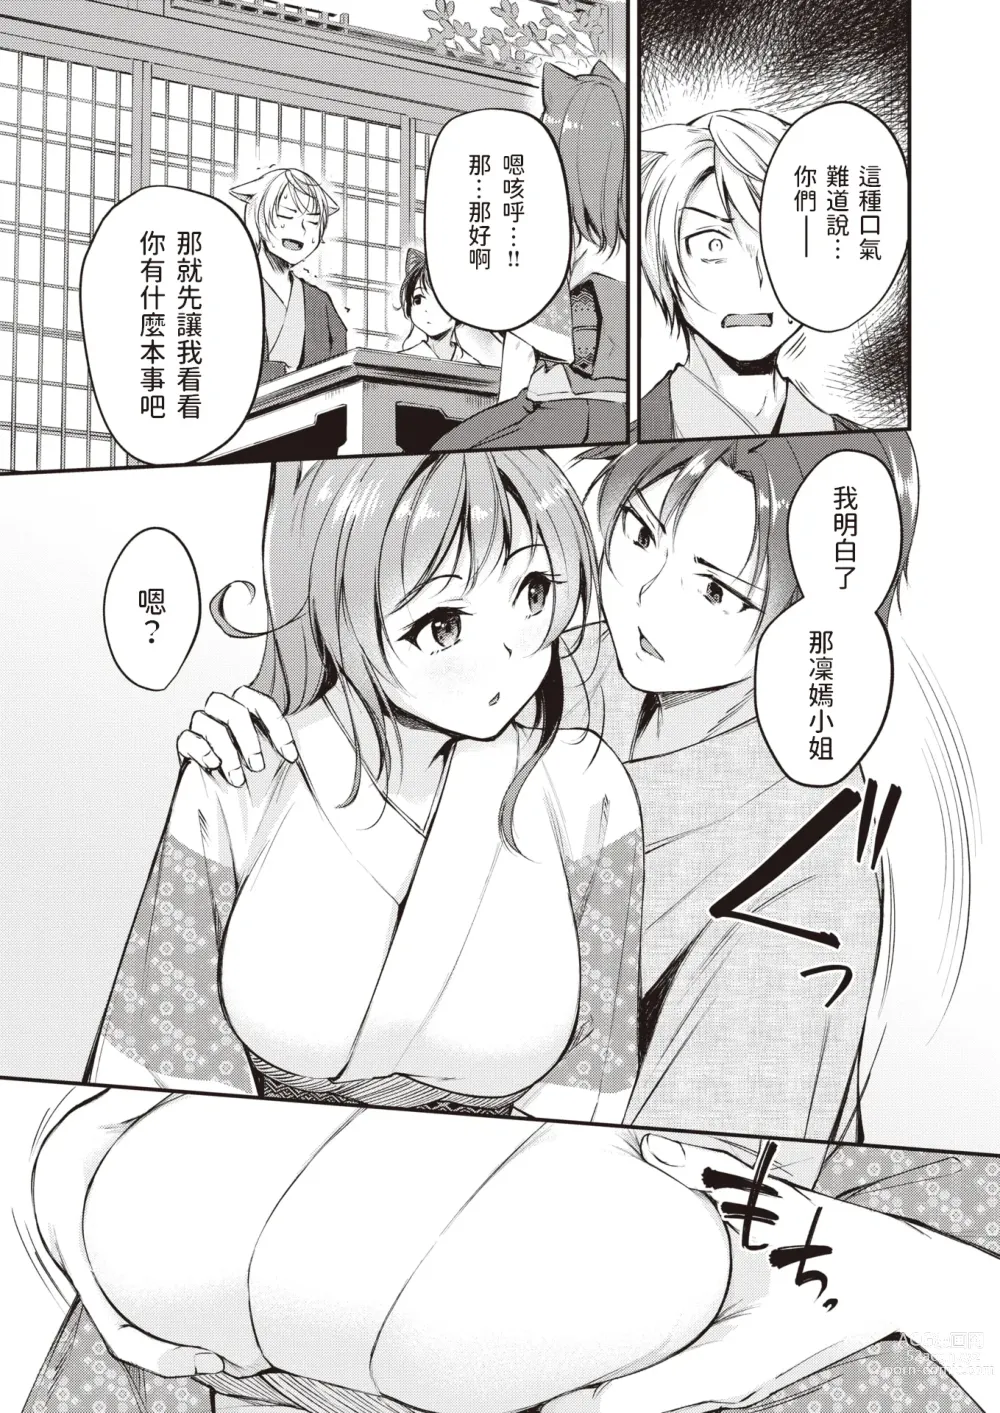 Page 9 of manga Kemomimi no Senjutsushi ~Yoko Mimi no Dendoushi~